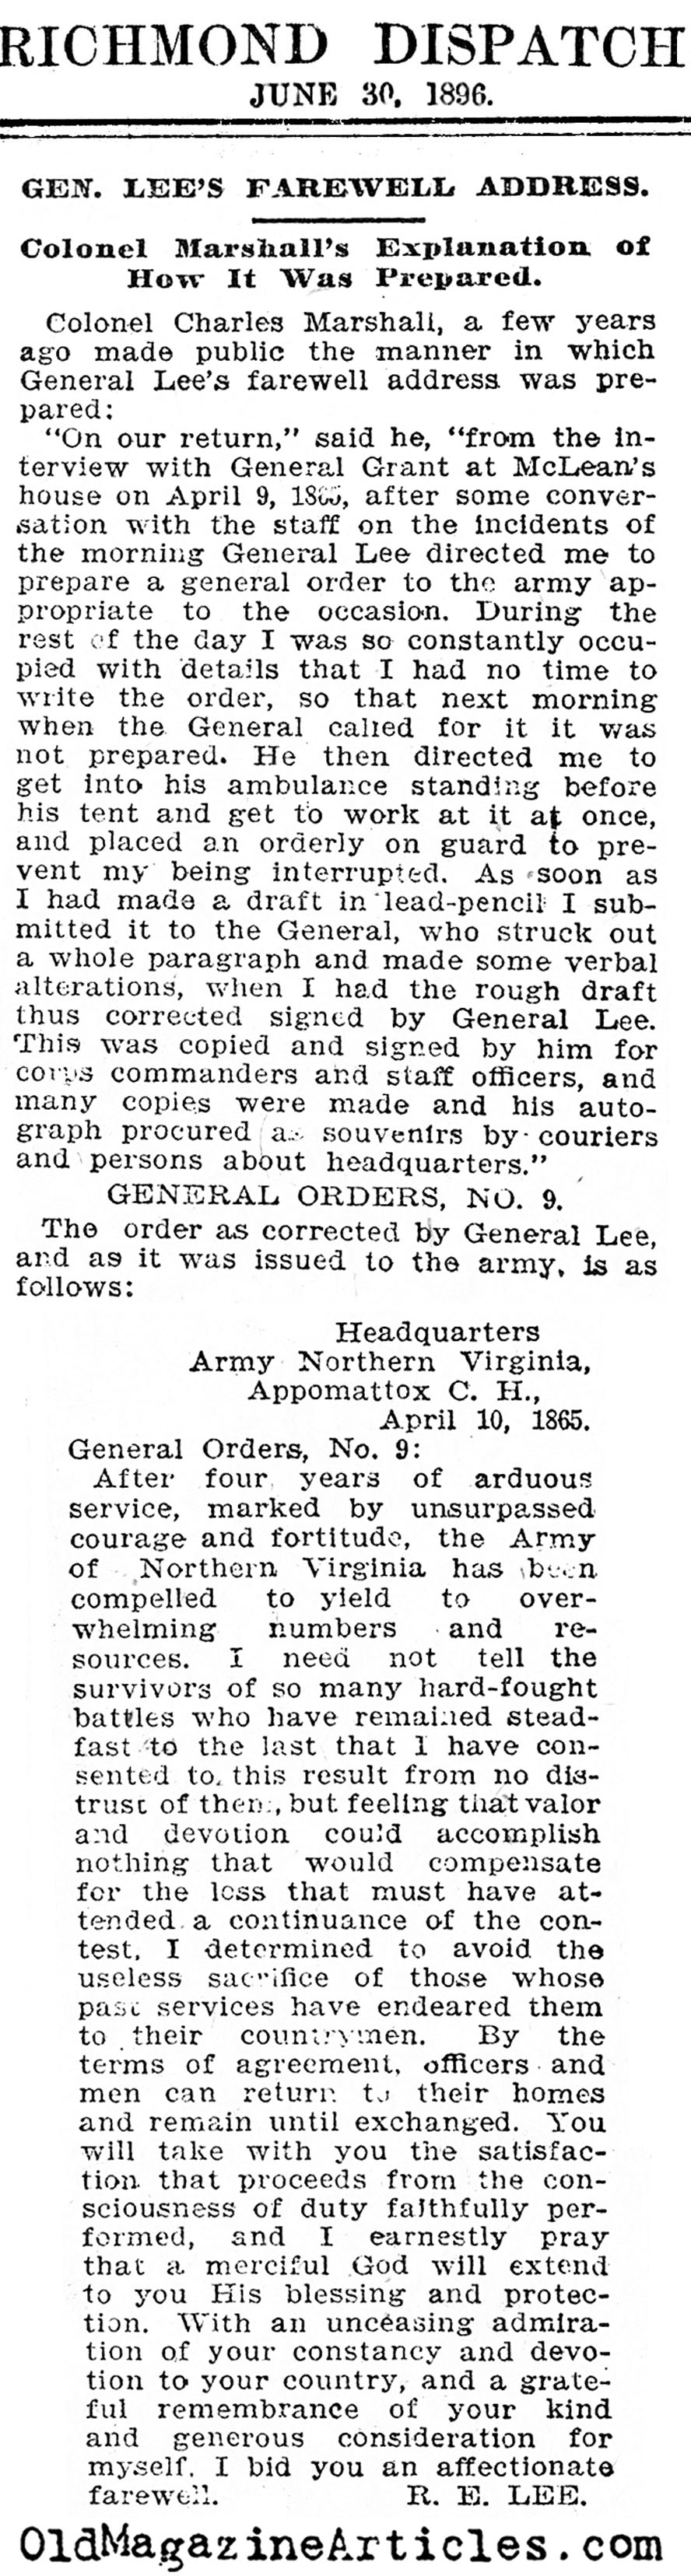 General Lee's Farewell Address (Richmond Dispatch, 1896)